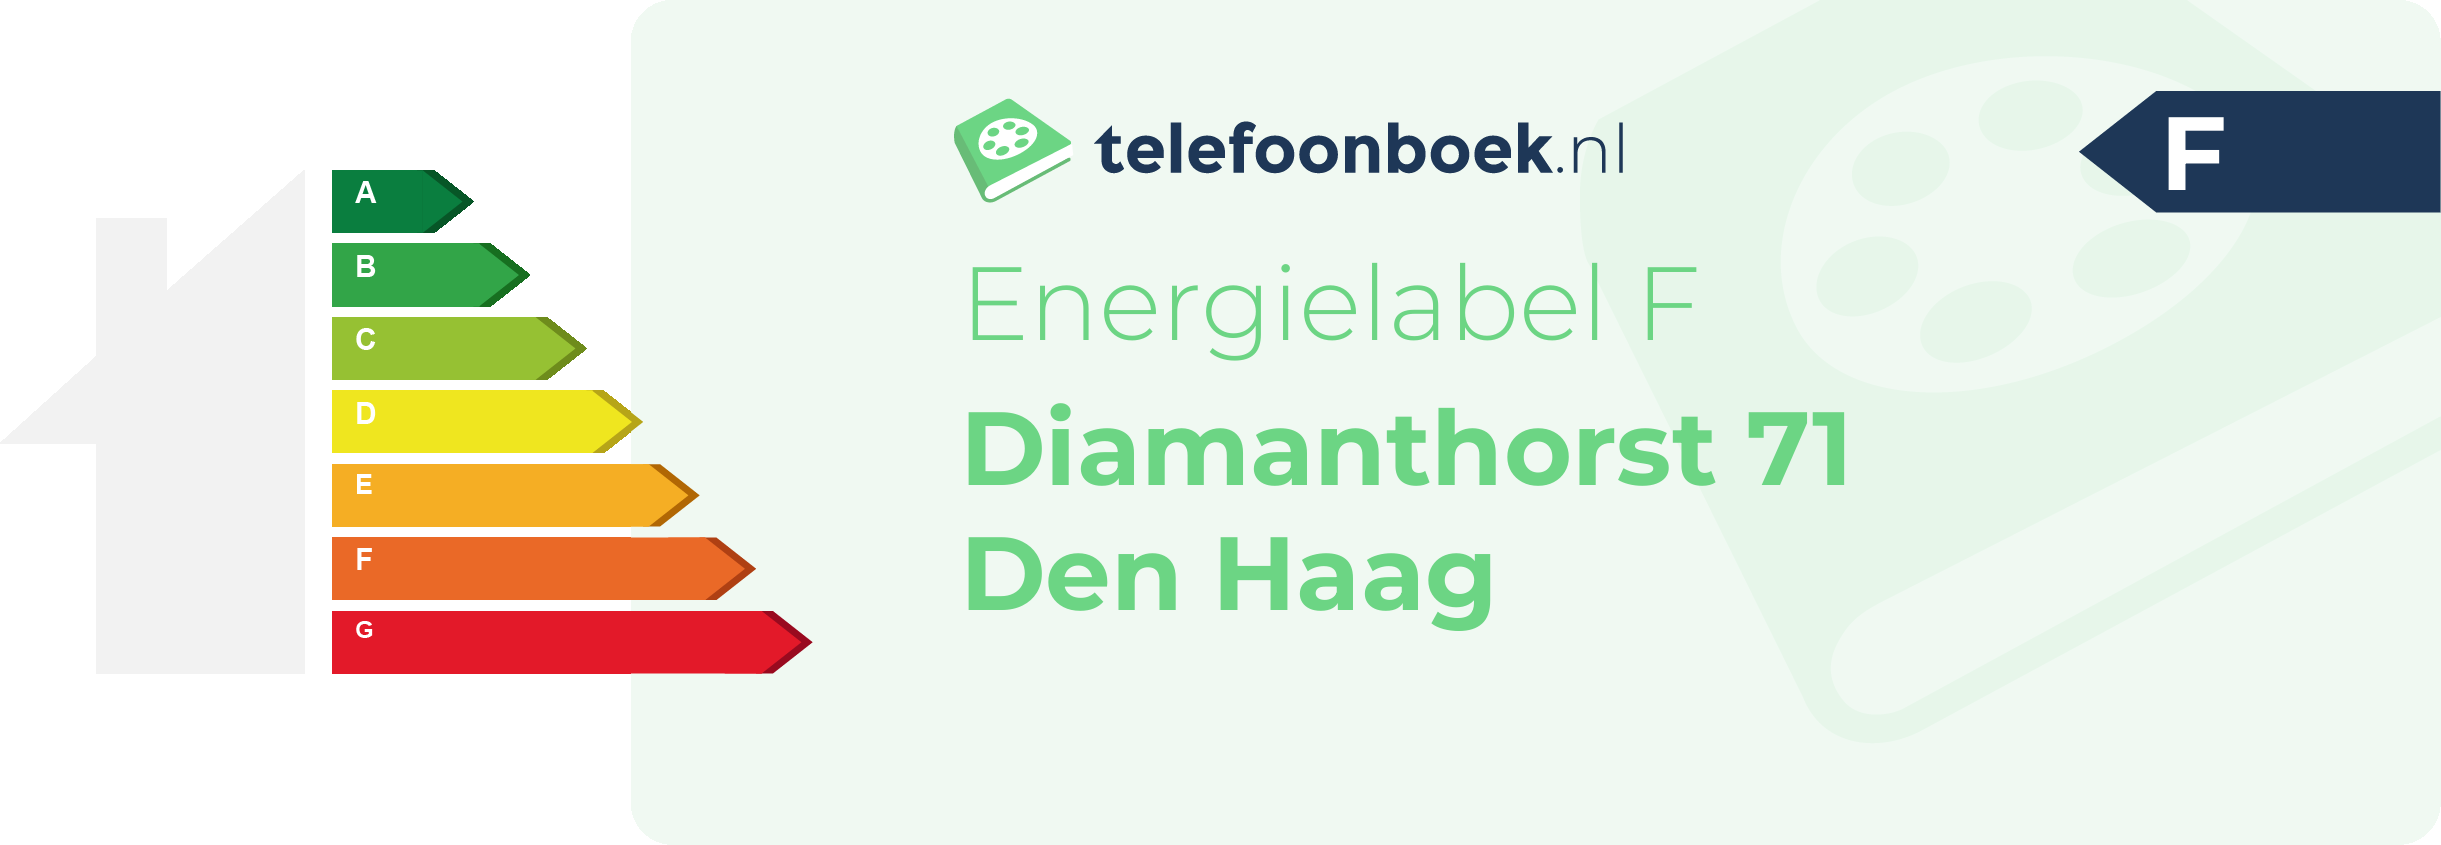 Energielabel Diamanthorst 71 Den Haag